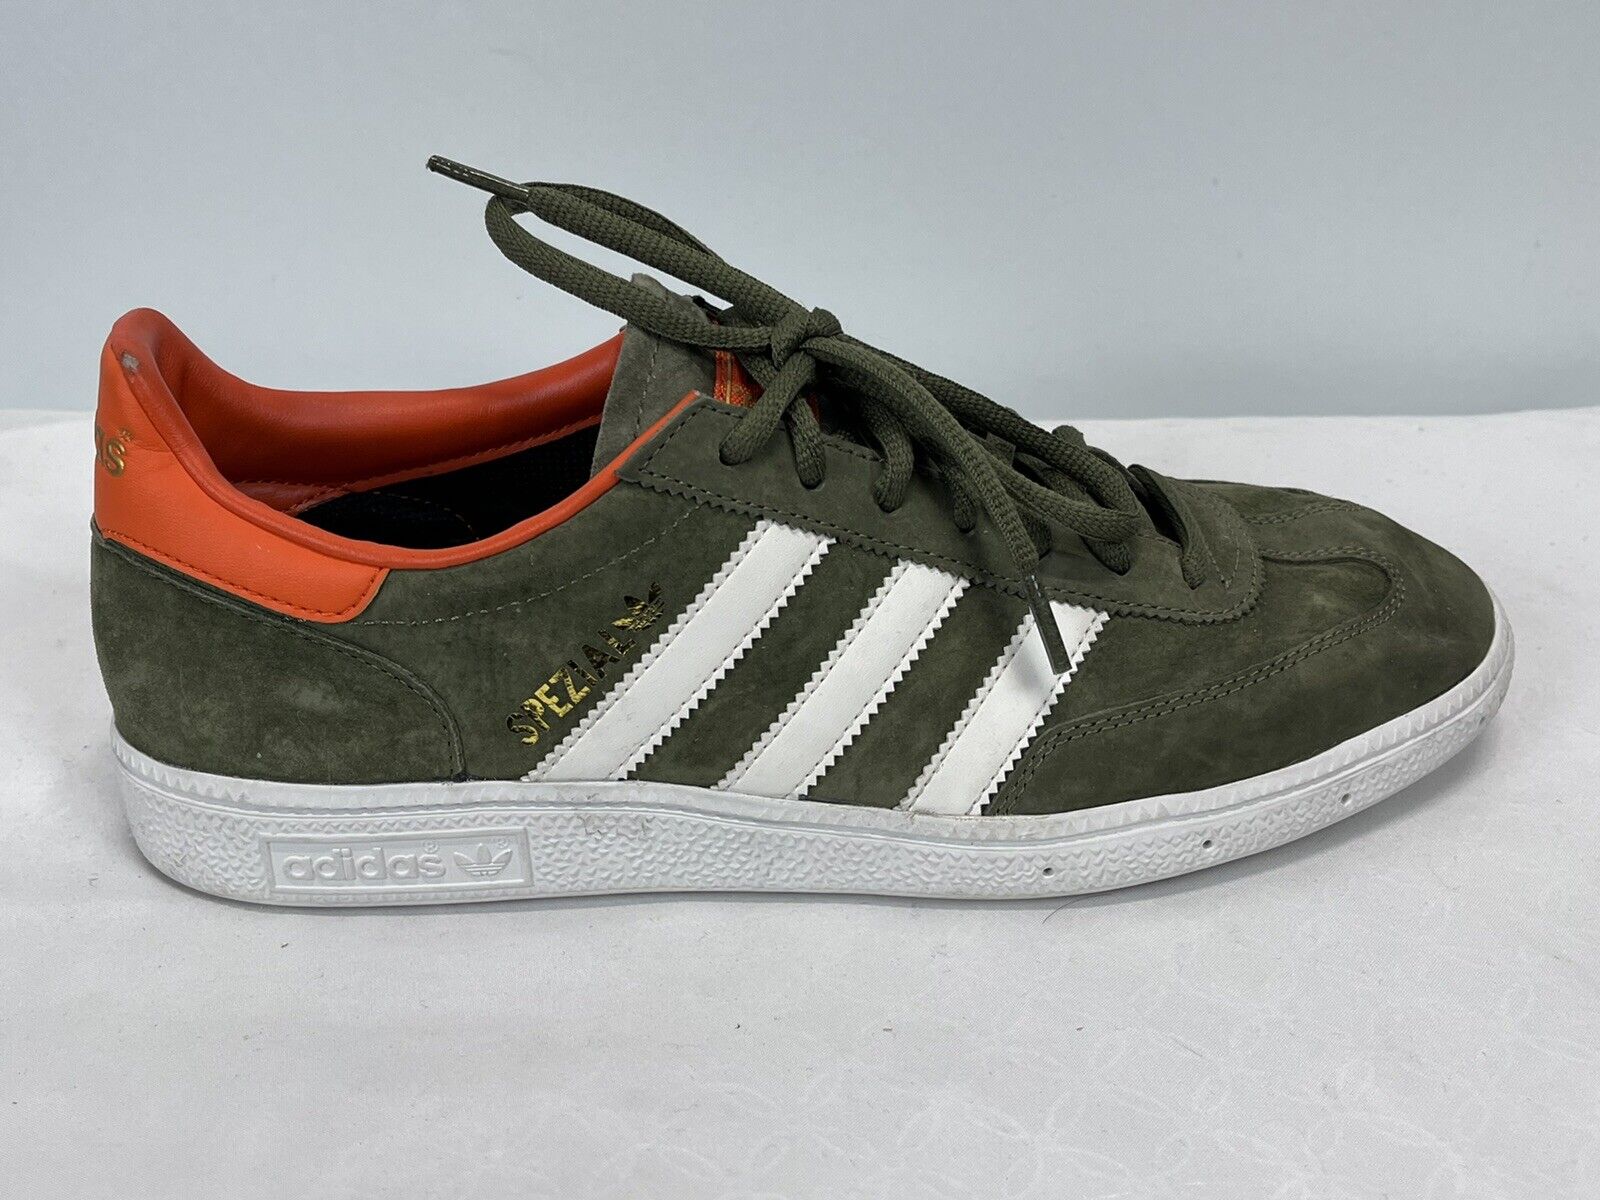 Mens Adidas Spezial Sneakers Shoes Sz 9 GUC Olive &amp; Orange | eBay